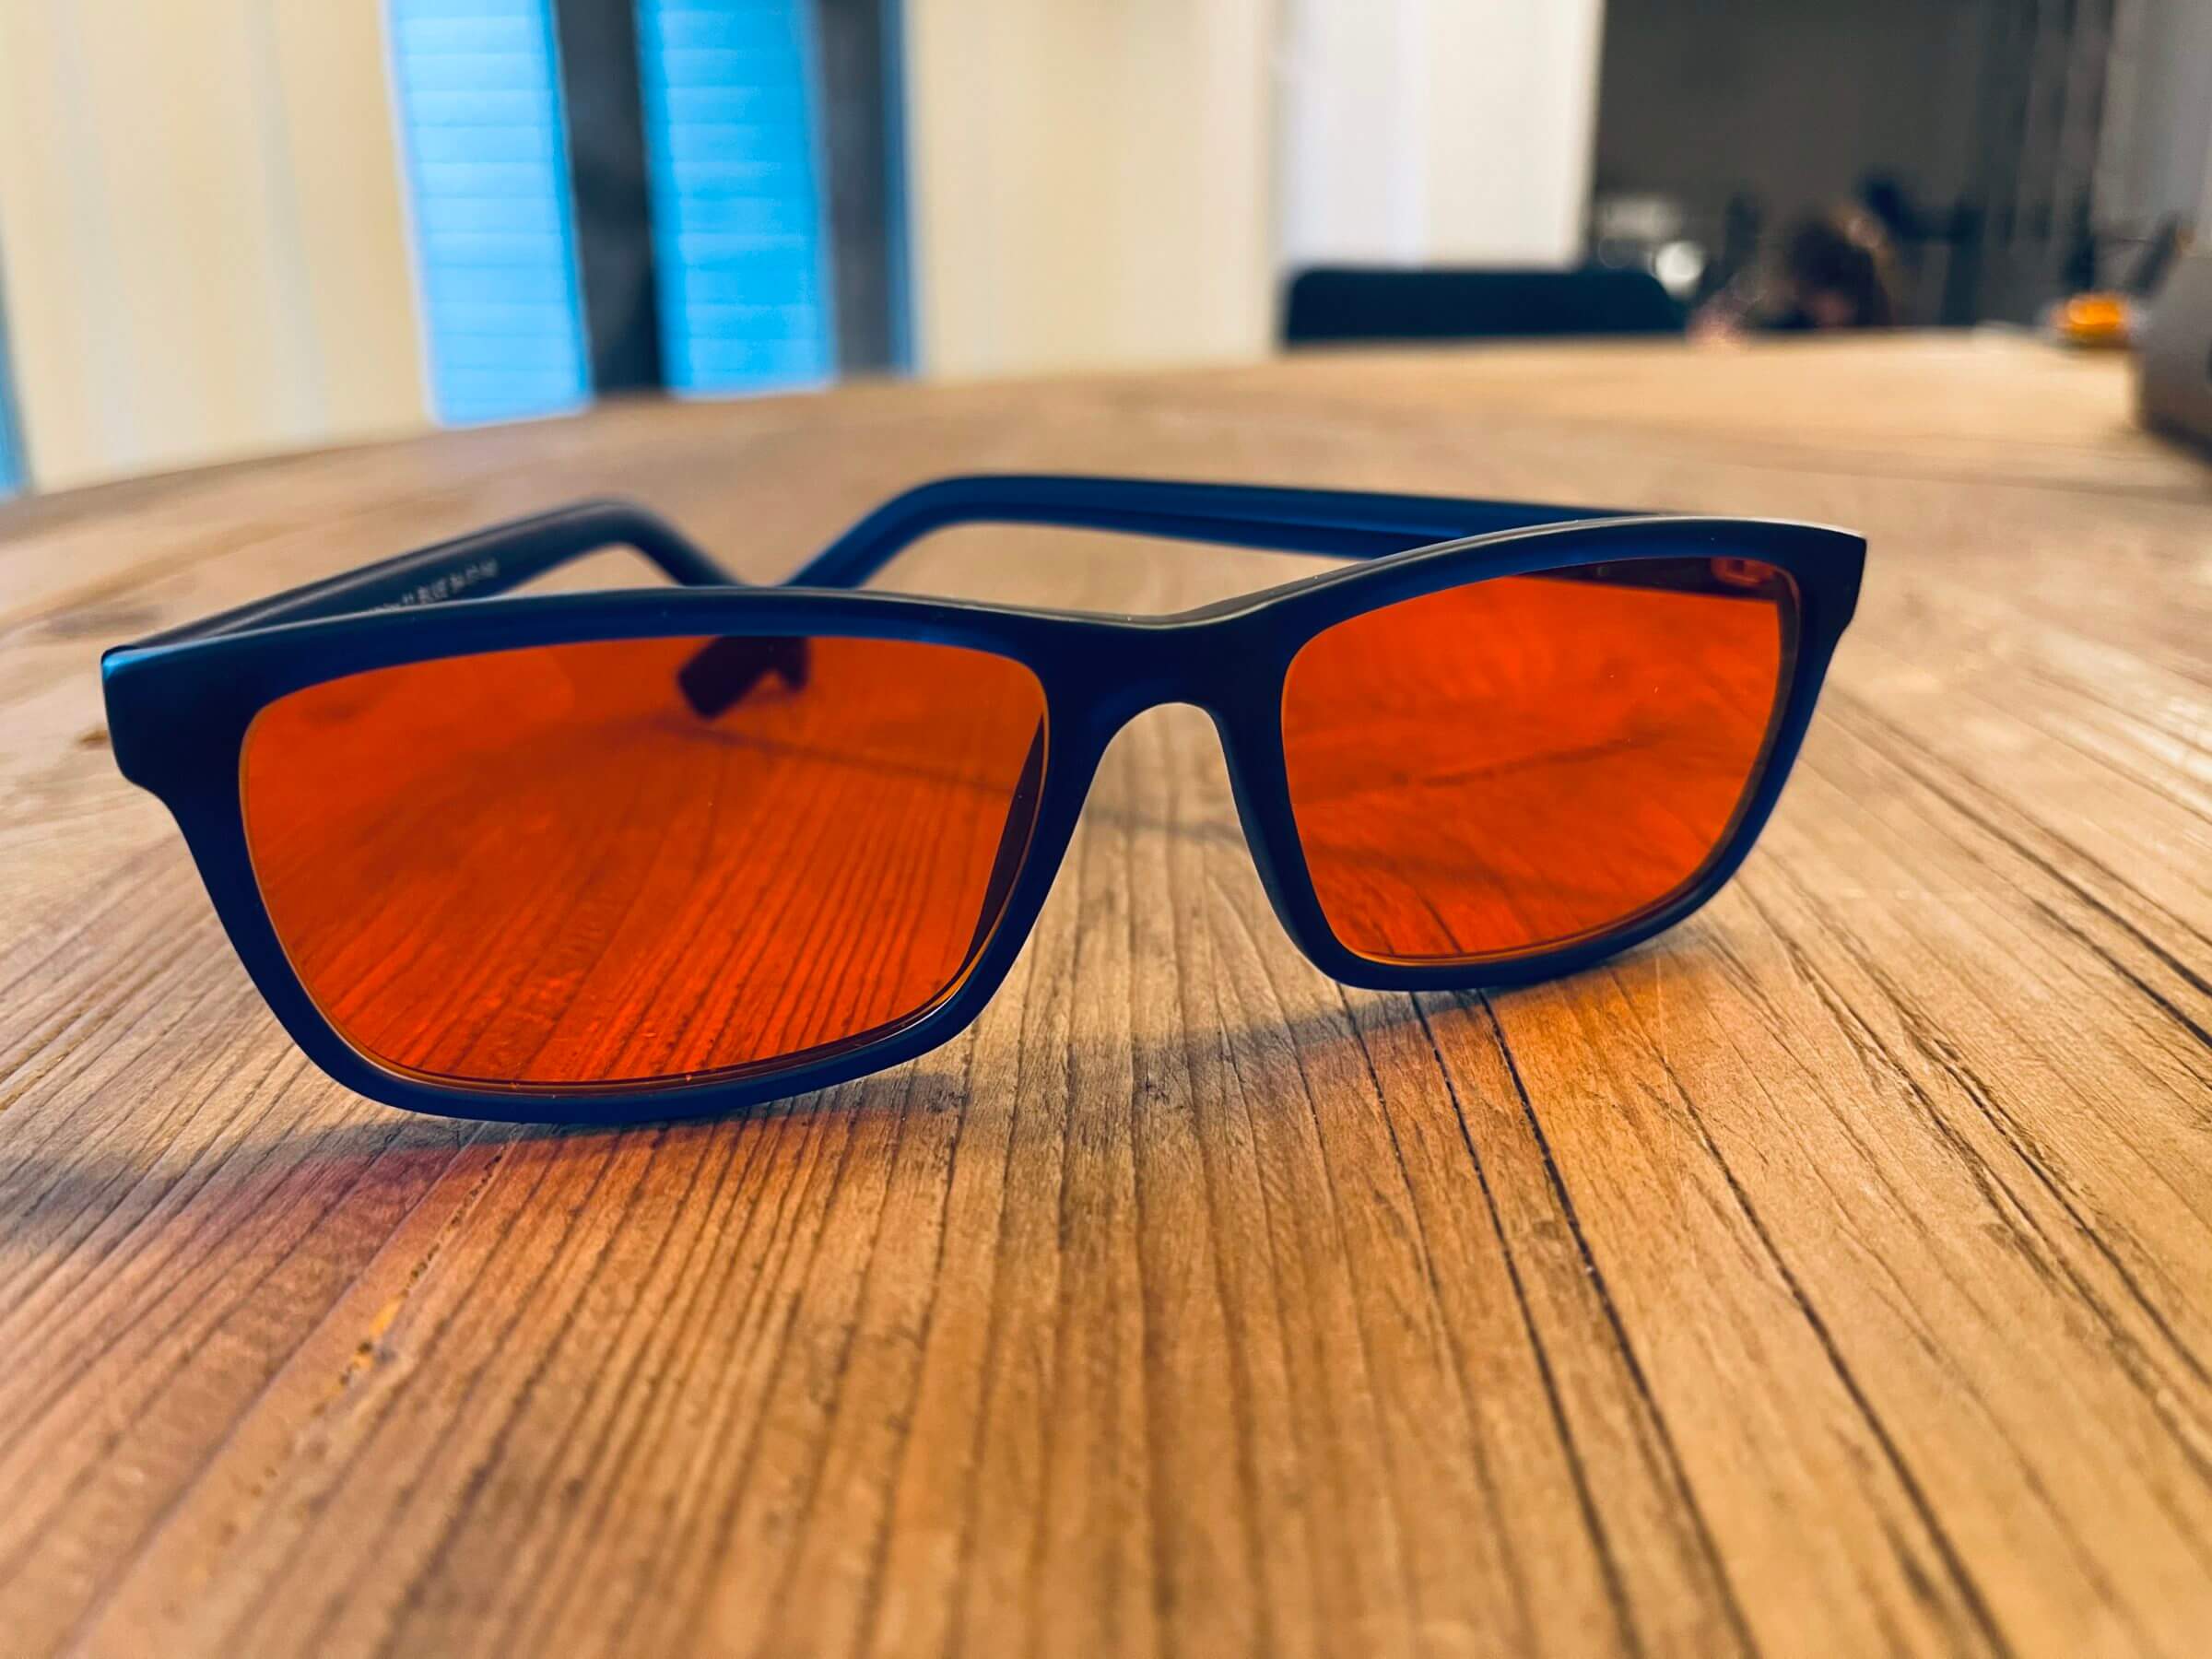 Back By Customer Demand after 1 Year - Blu Blocker Sunglasses